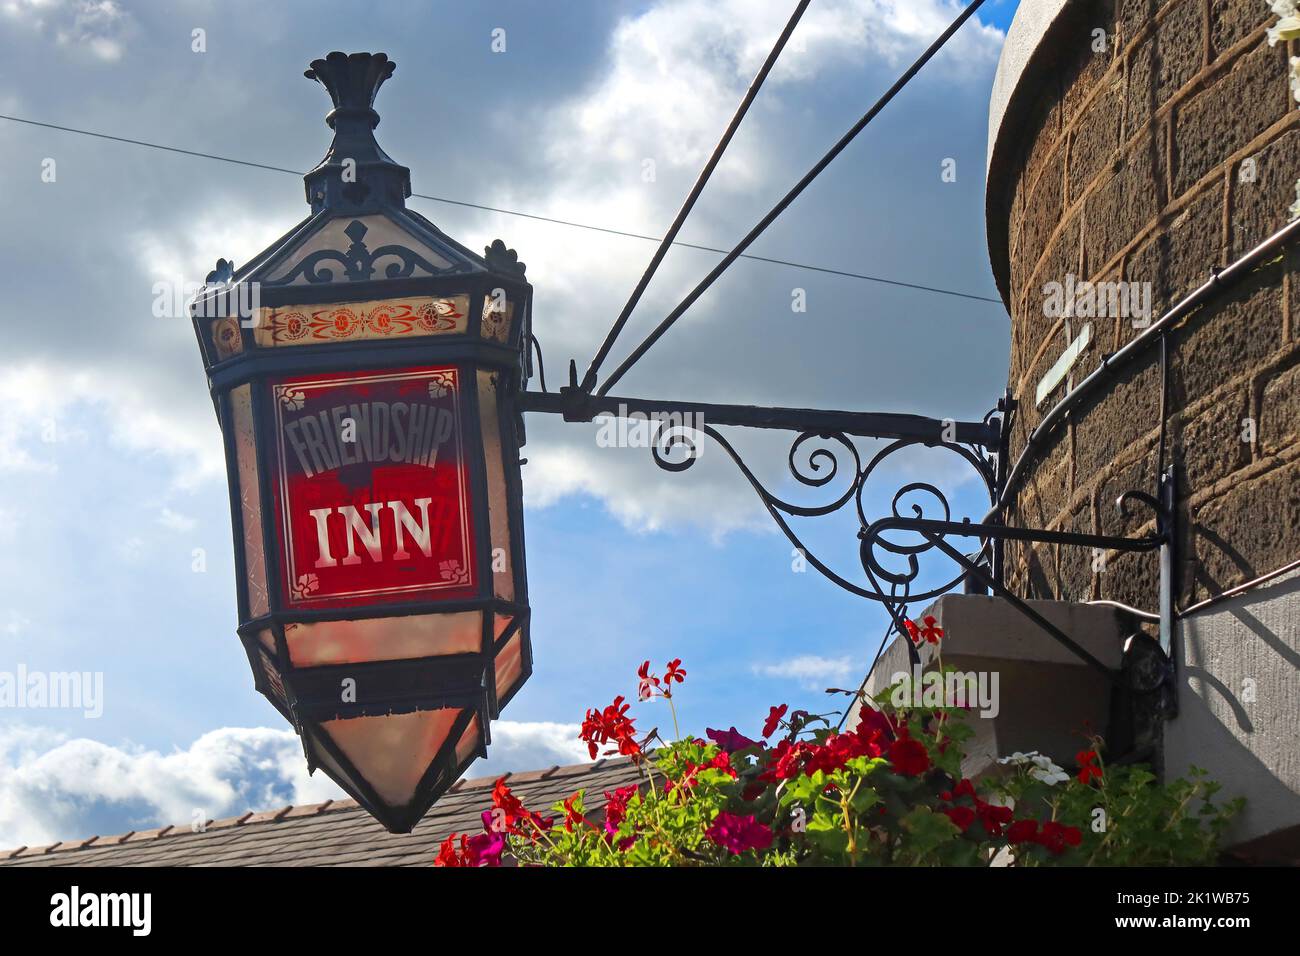 Feu rouge au Friendship Inn, 3, rue Arundel, Glossop, High Peak, Derbyshire, Angleterre, Royaume-Uni, SK13 7AB Banque D'Images